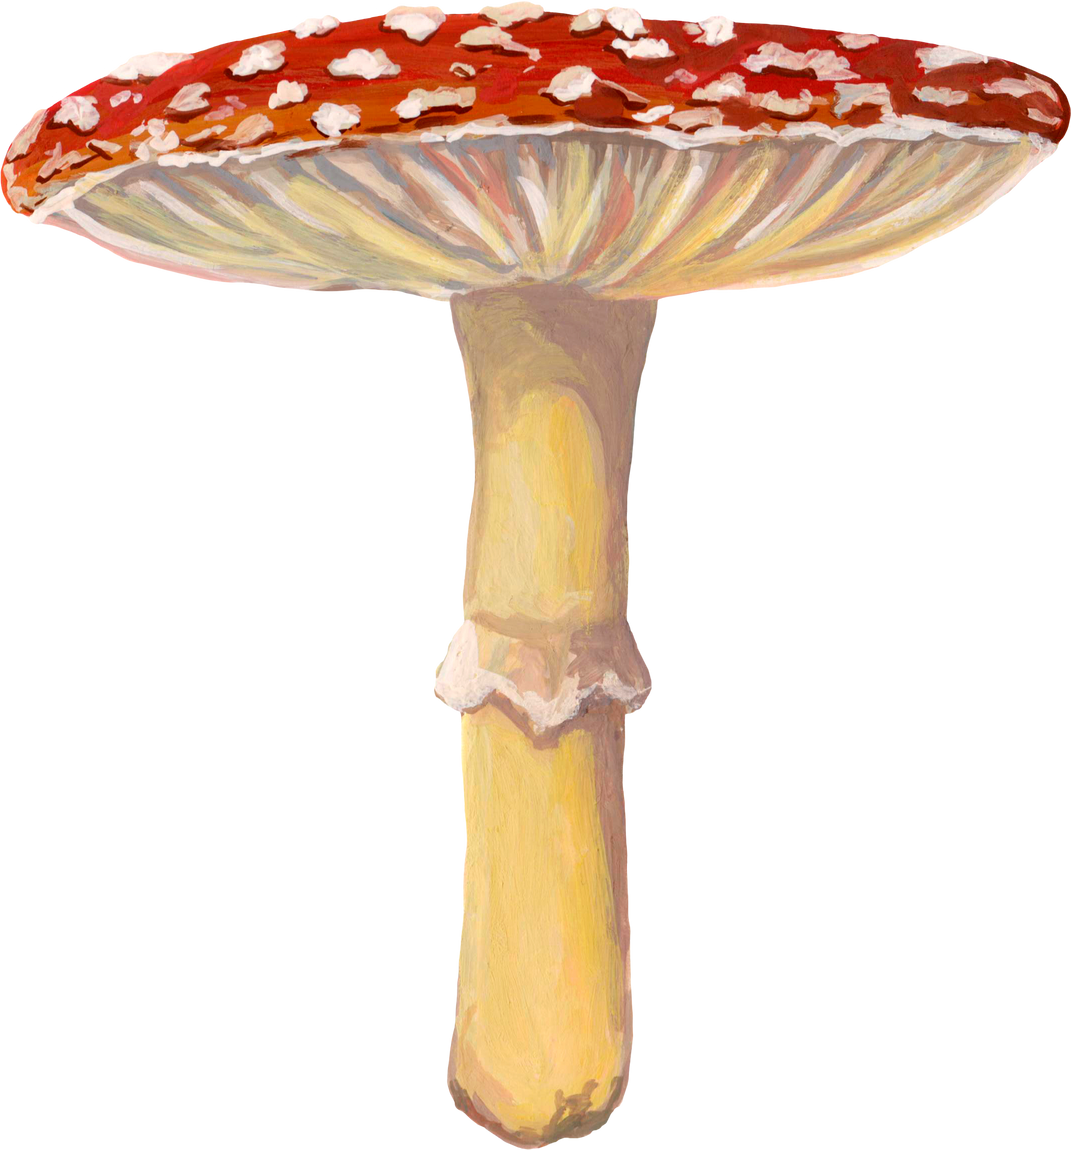 Amanita Poisonous Mushroom Gouache Painting